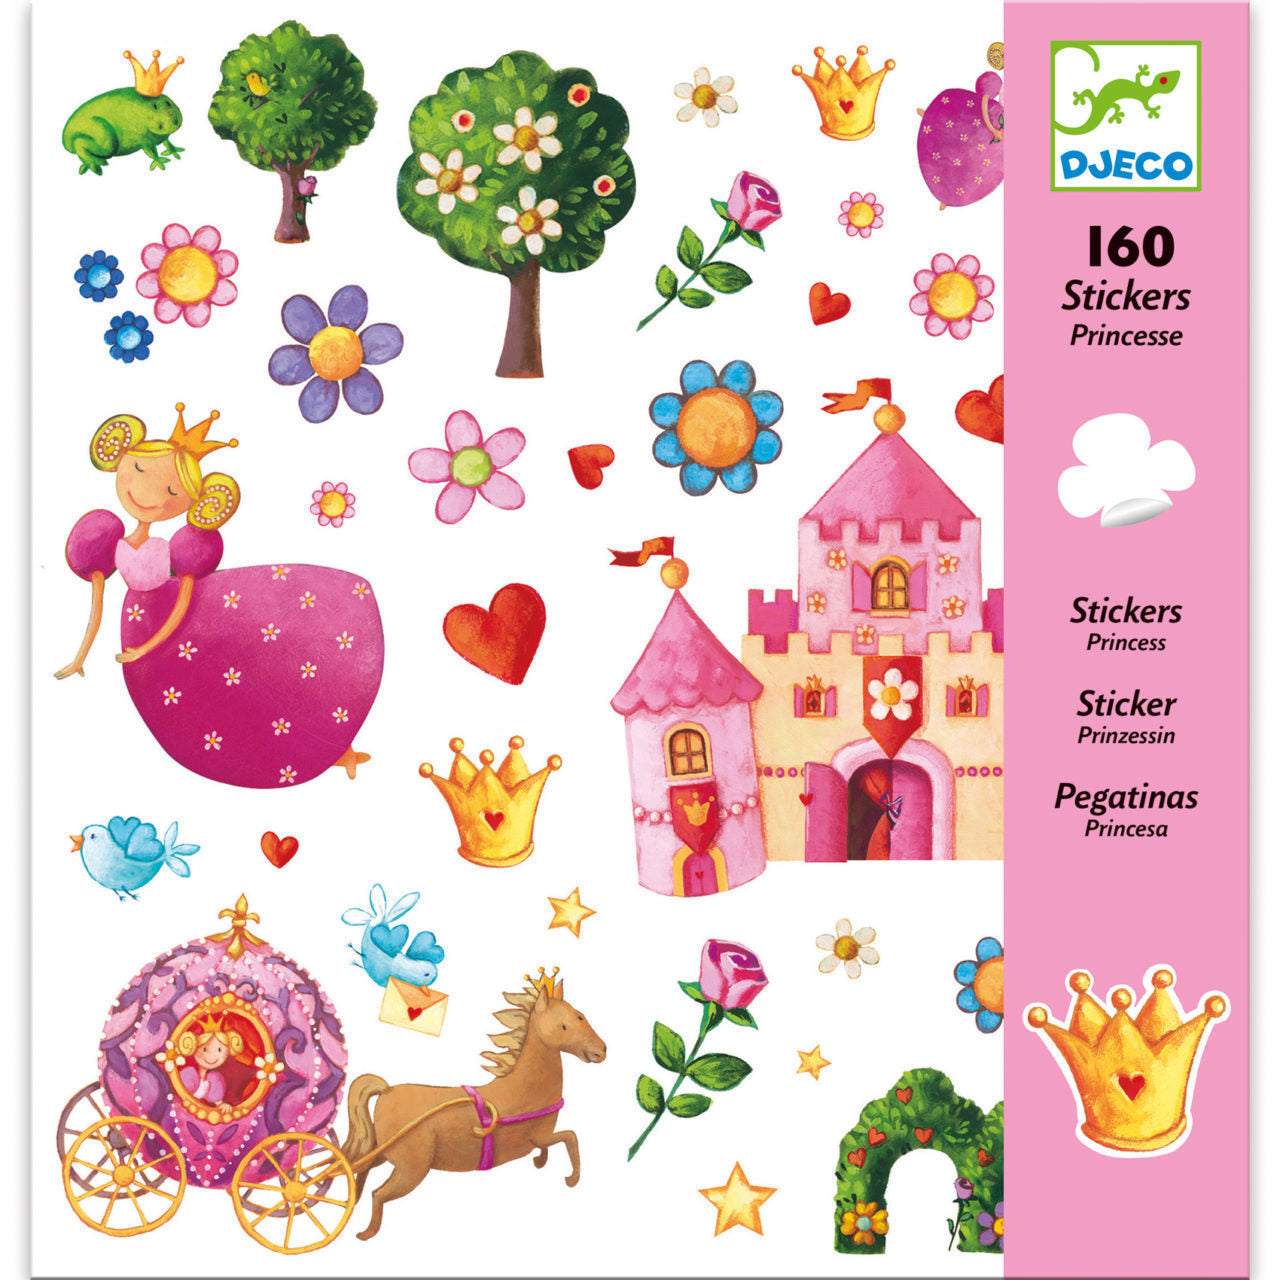 djeco-sticker-collection-princess-marguerite-1